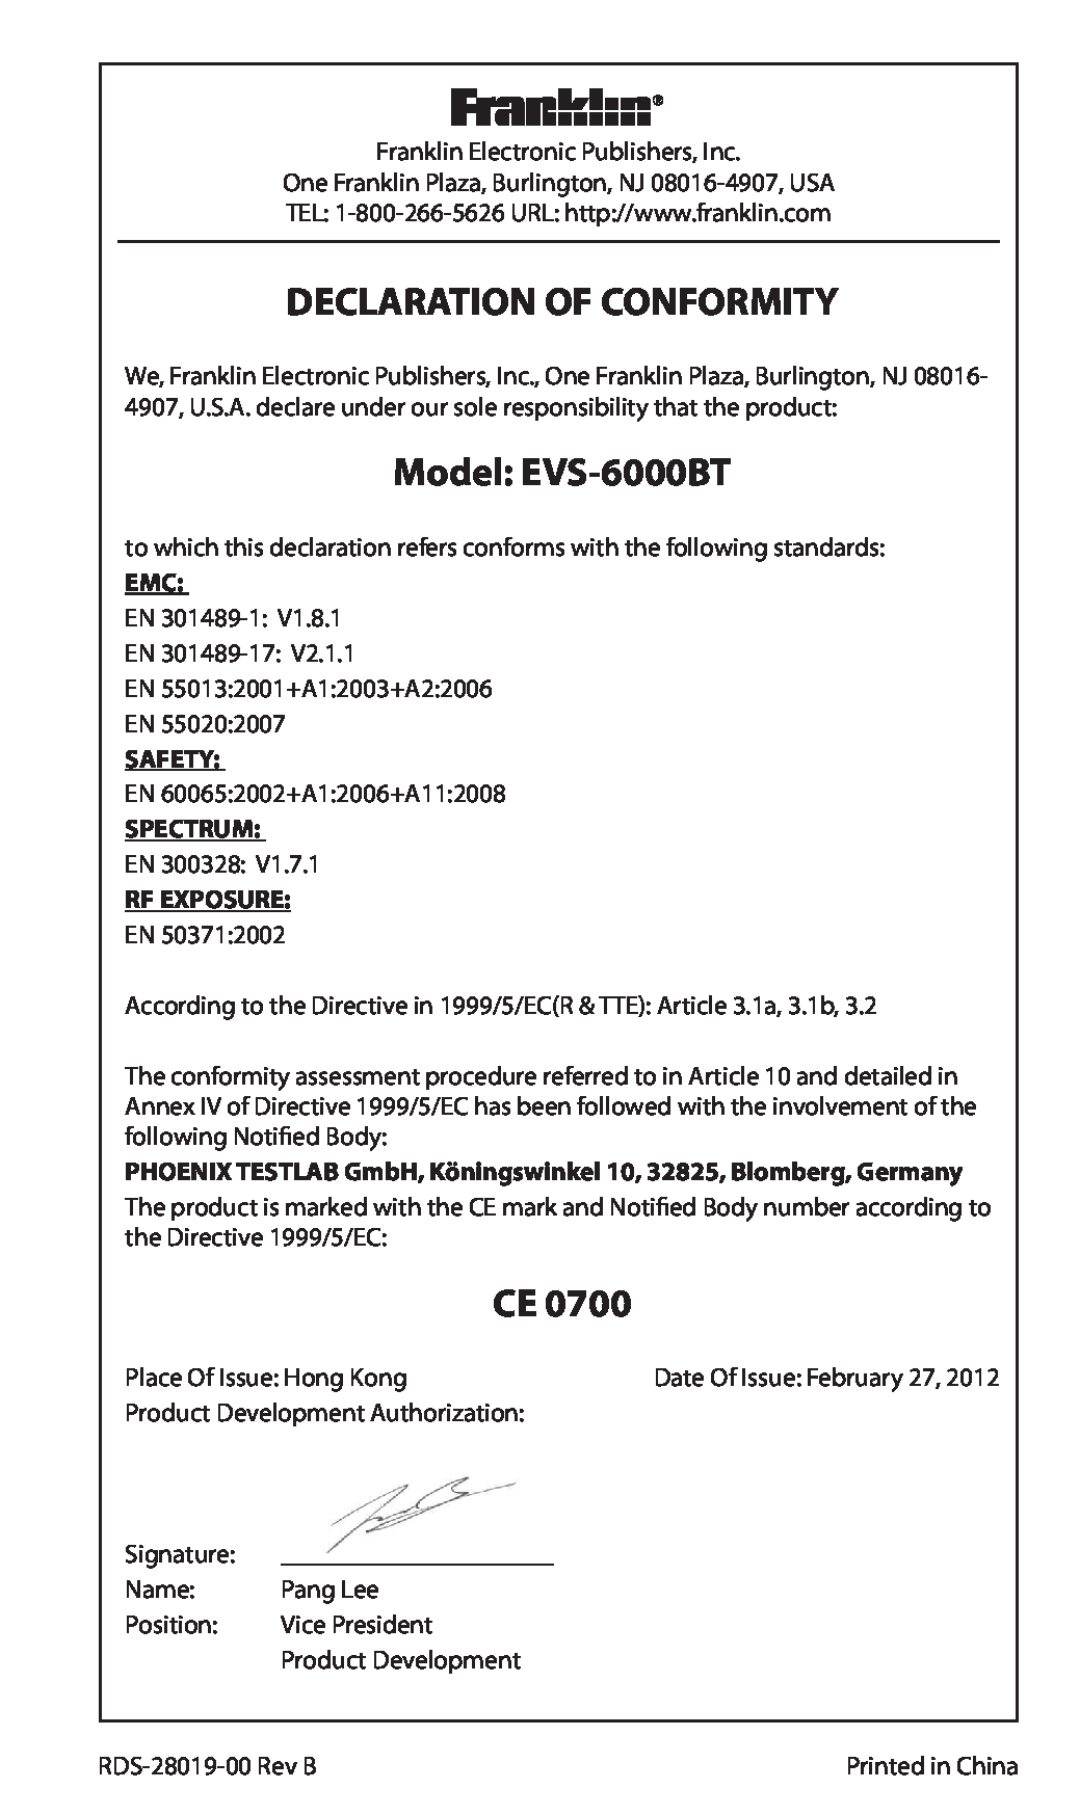 Franklin manual Declaration Of Conformity, Model EVS-6000BT, Safety, Spectrum, Rf Exposure 